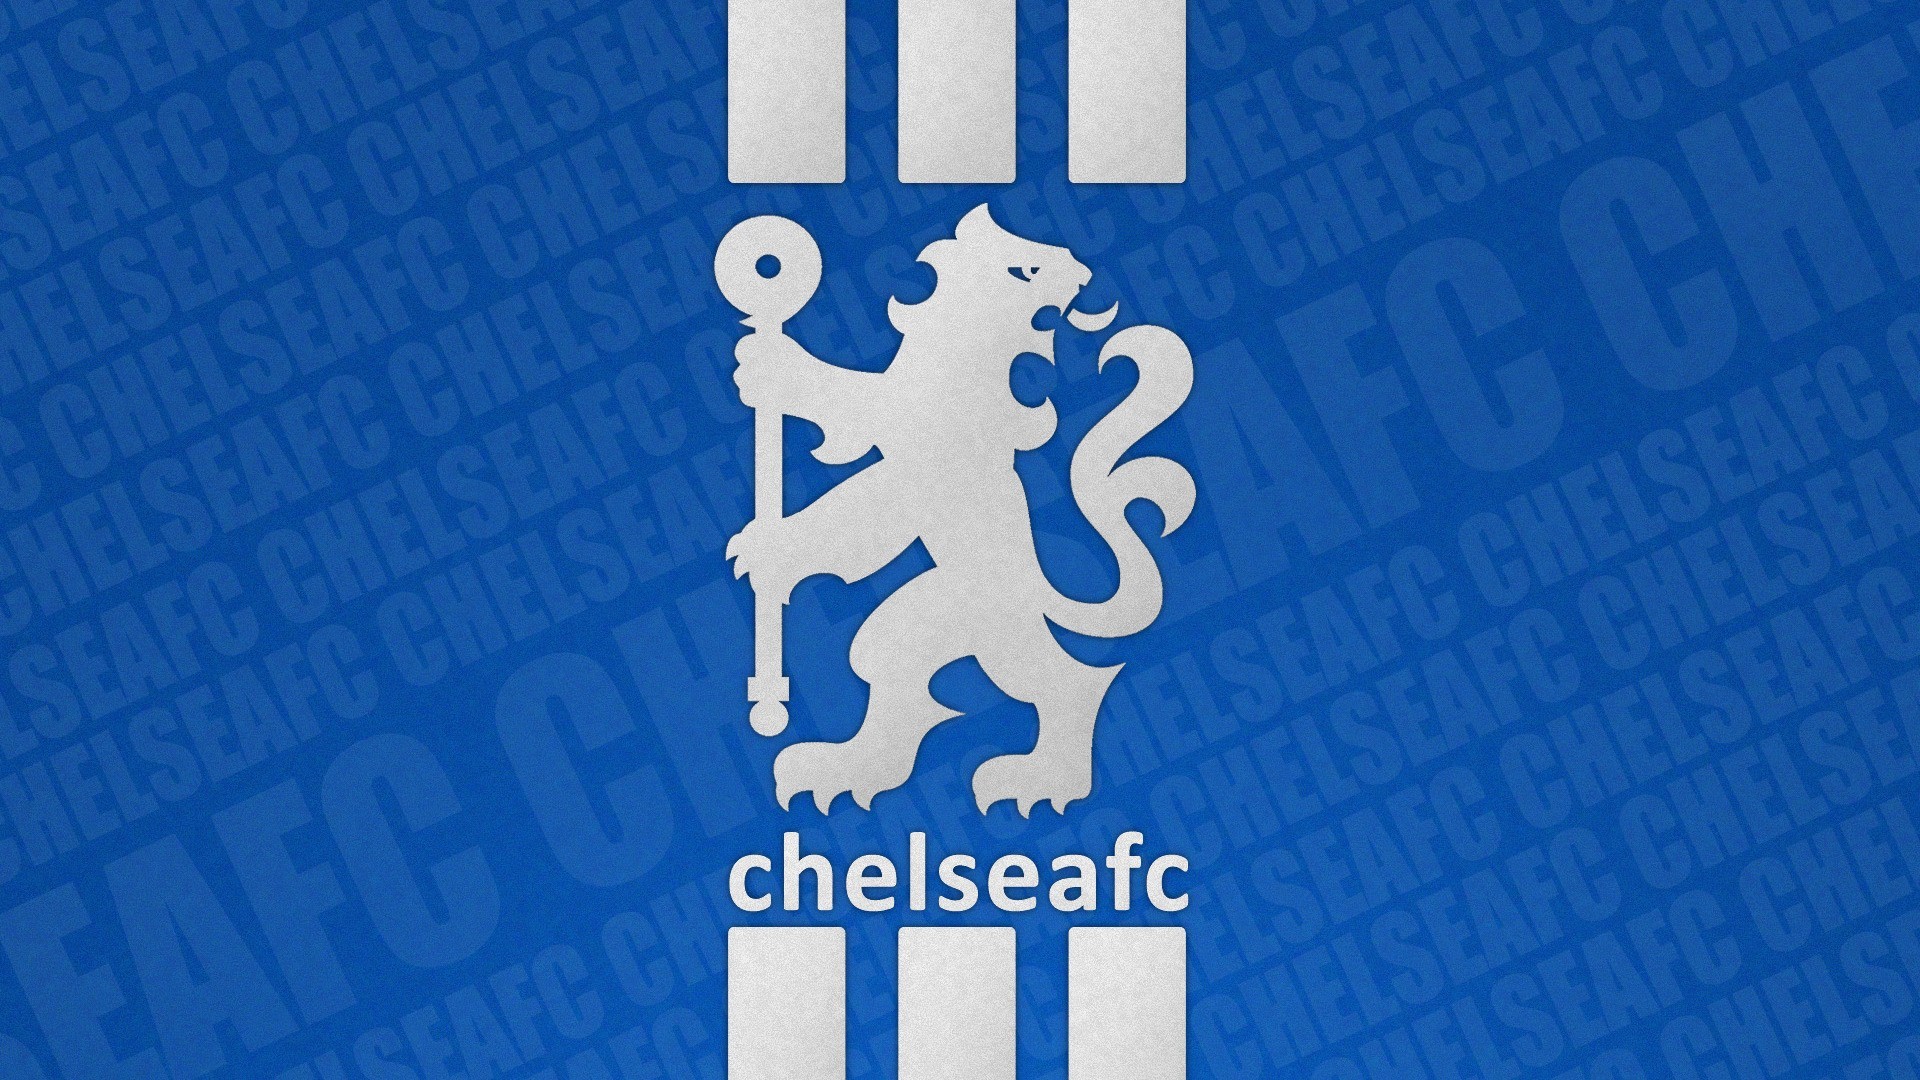 General 1920x1080 Chelsea FC logo sport soccer clubs British blue background